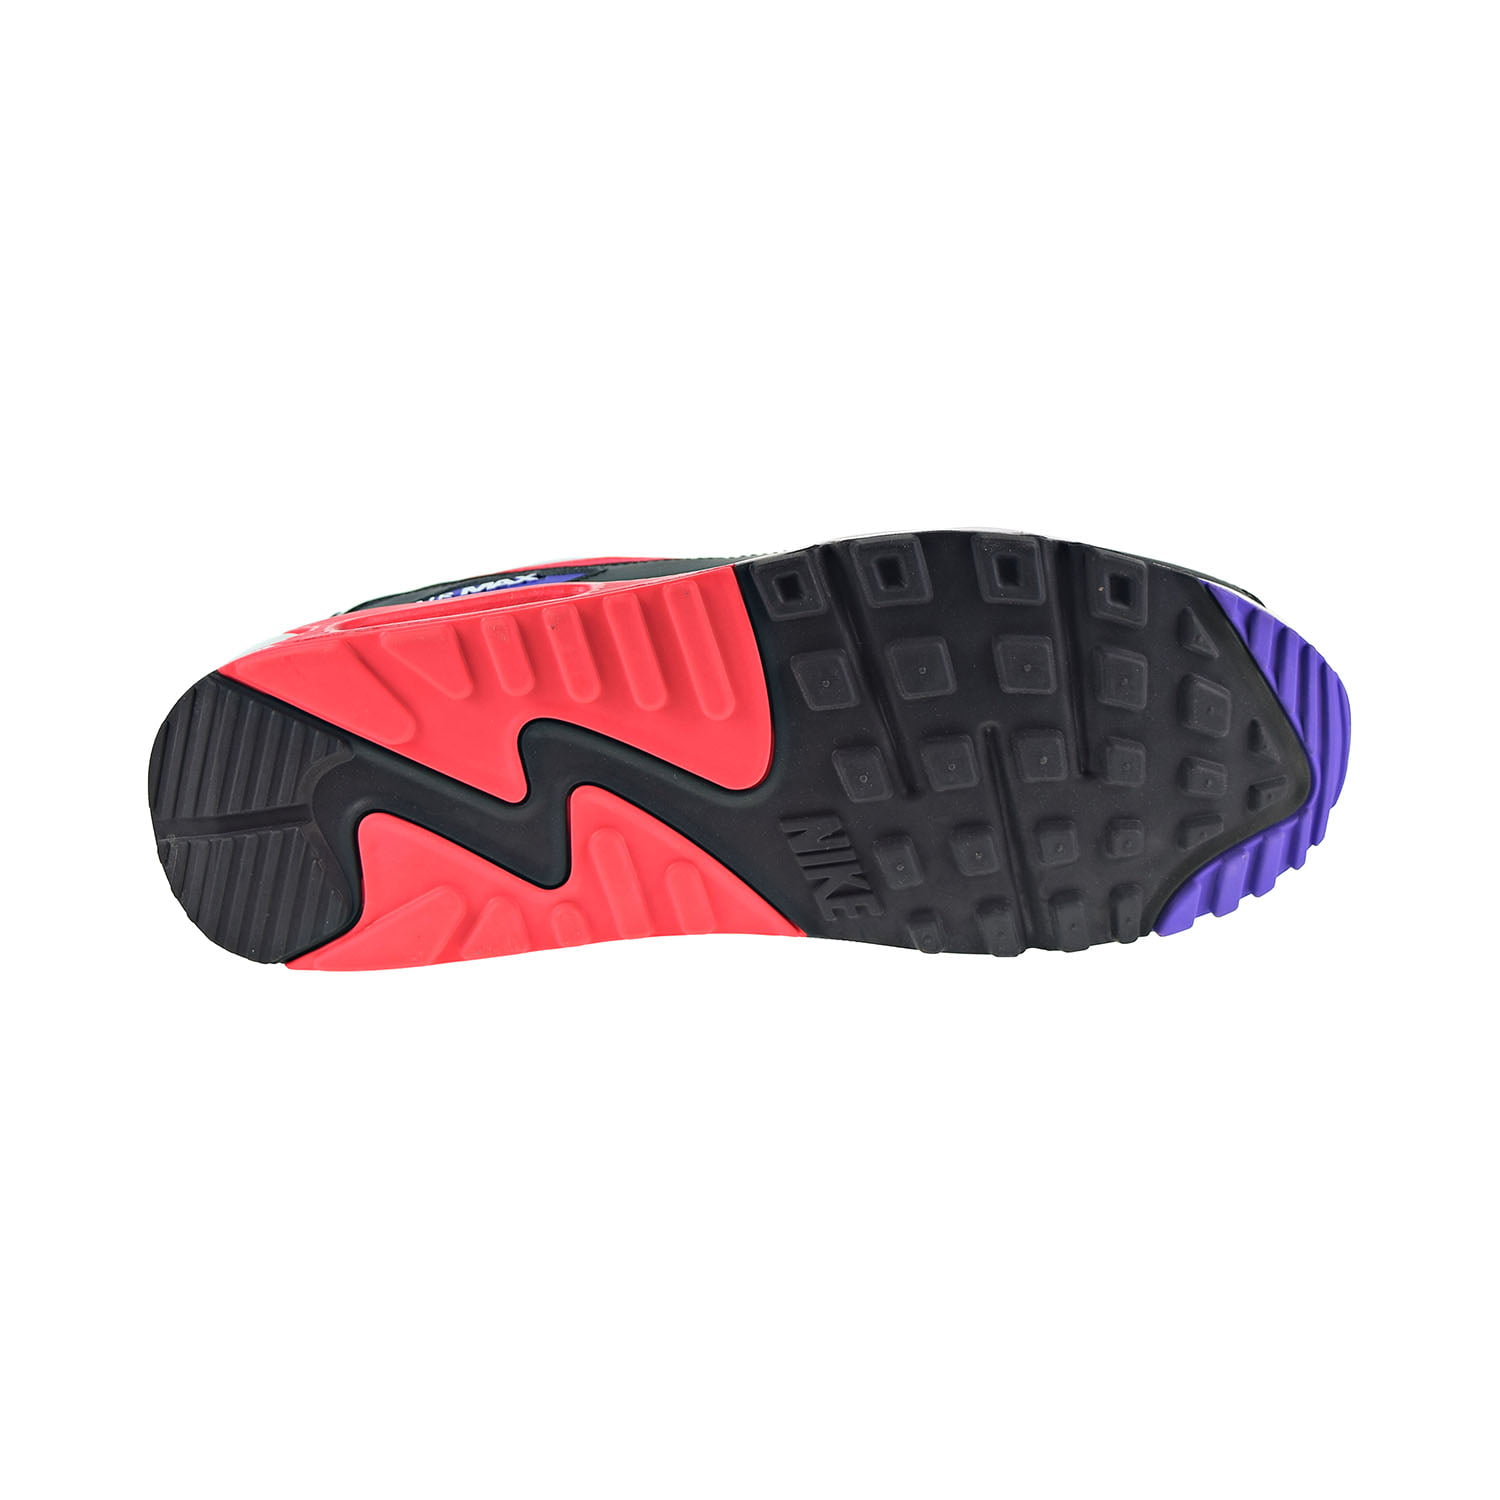 lid beu Toneelschrijver Nike Air Max 90 Essential Men's Shoes White-Red Orbit-Psychic Purple  aj1285-106 - Walmart.com